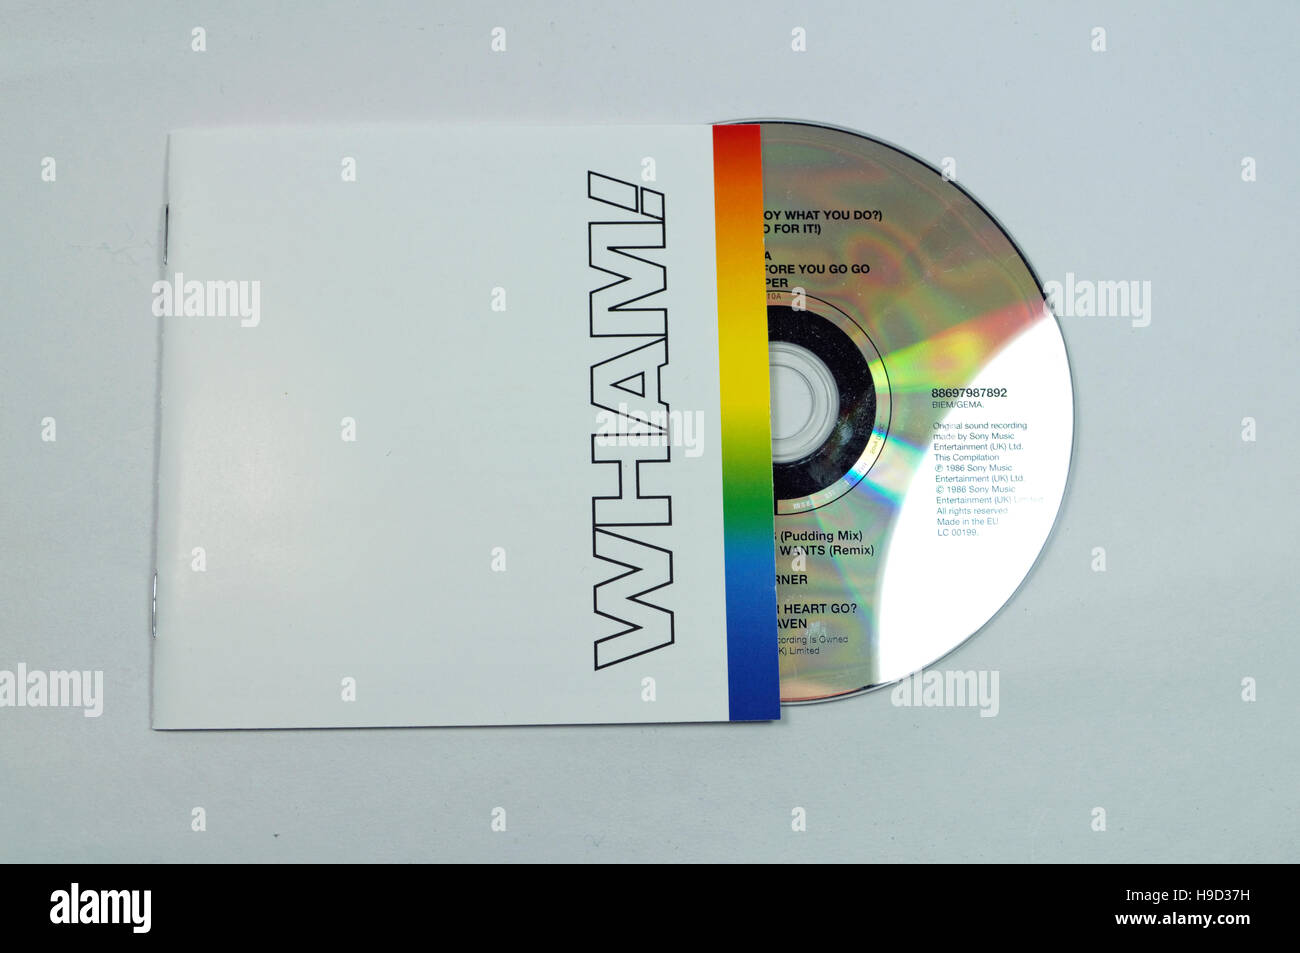 Wham Album,compact disc. Stock Photo